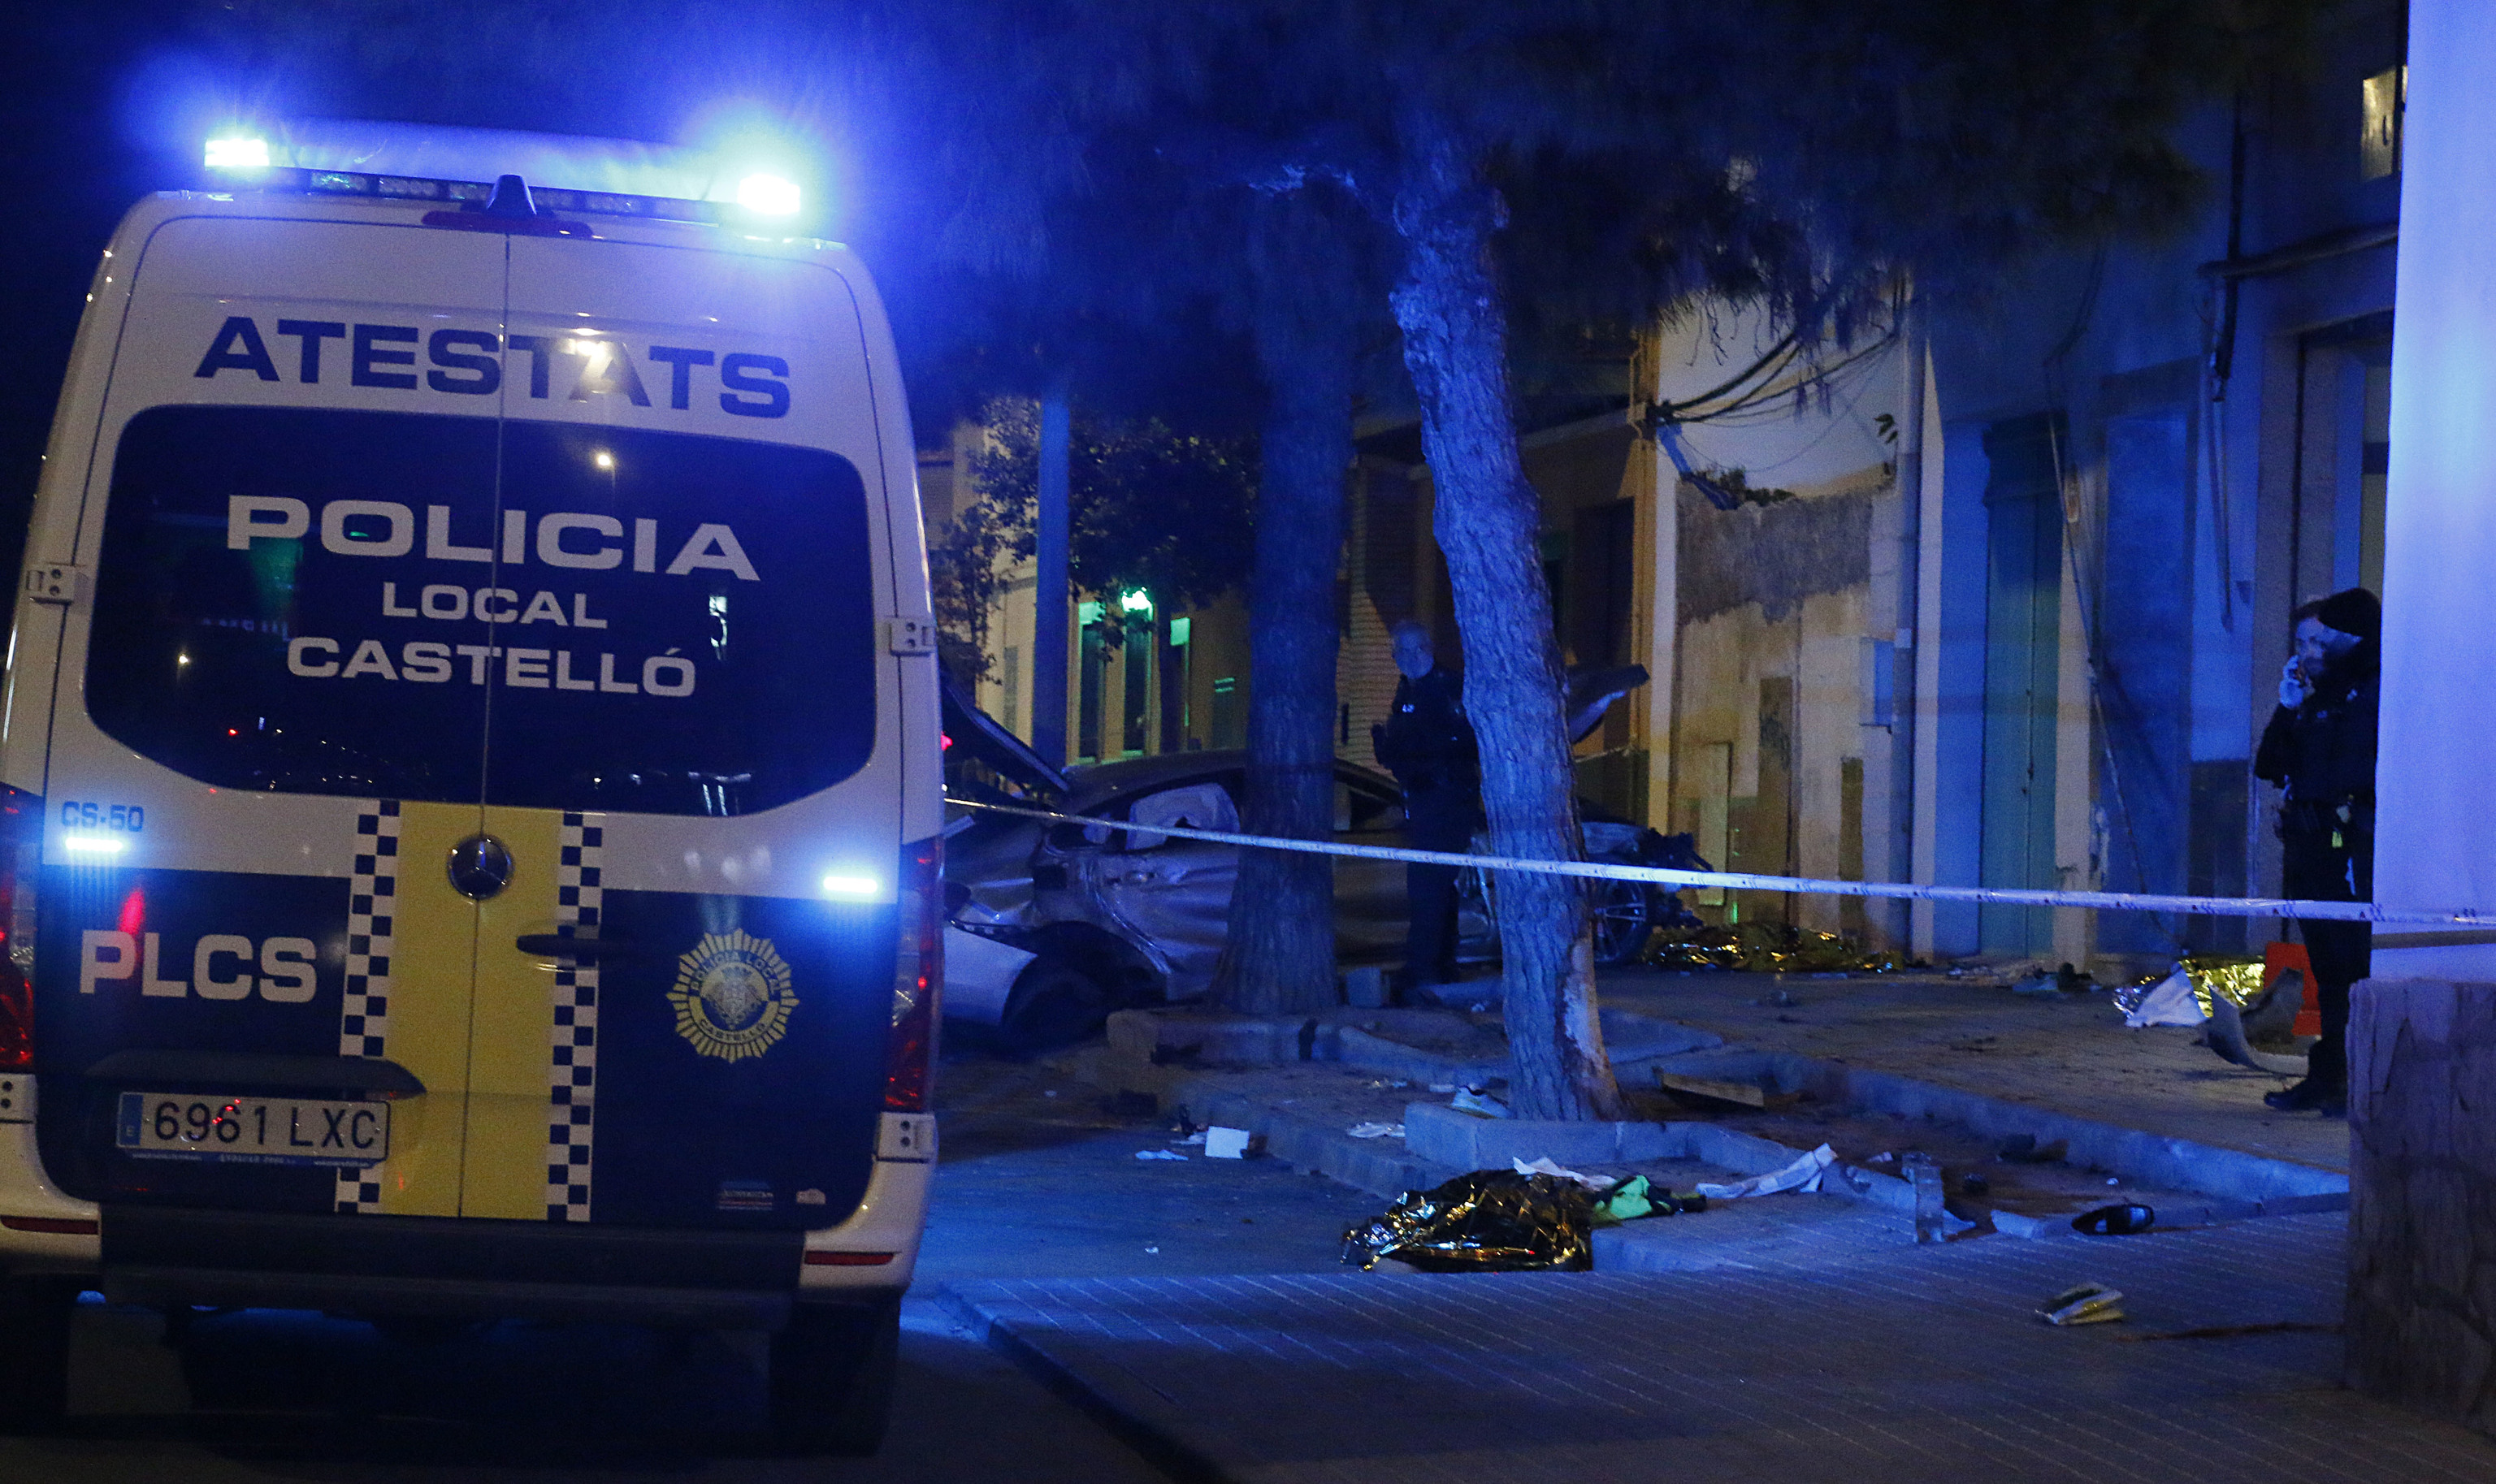 El accidente se produjo en la Avenida Alcora de Castelln.